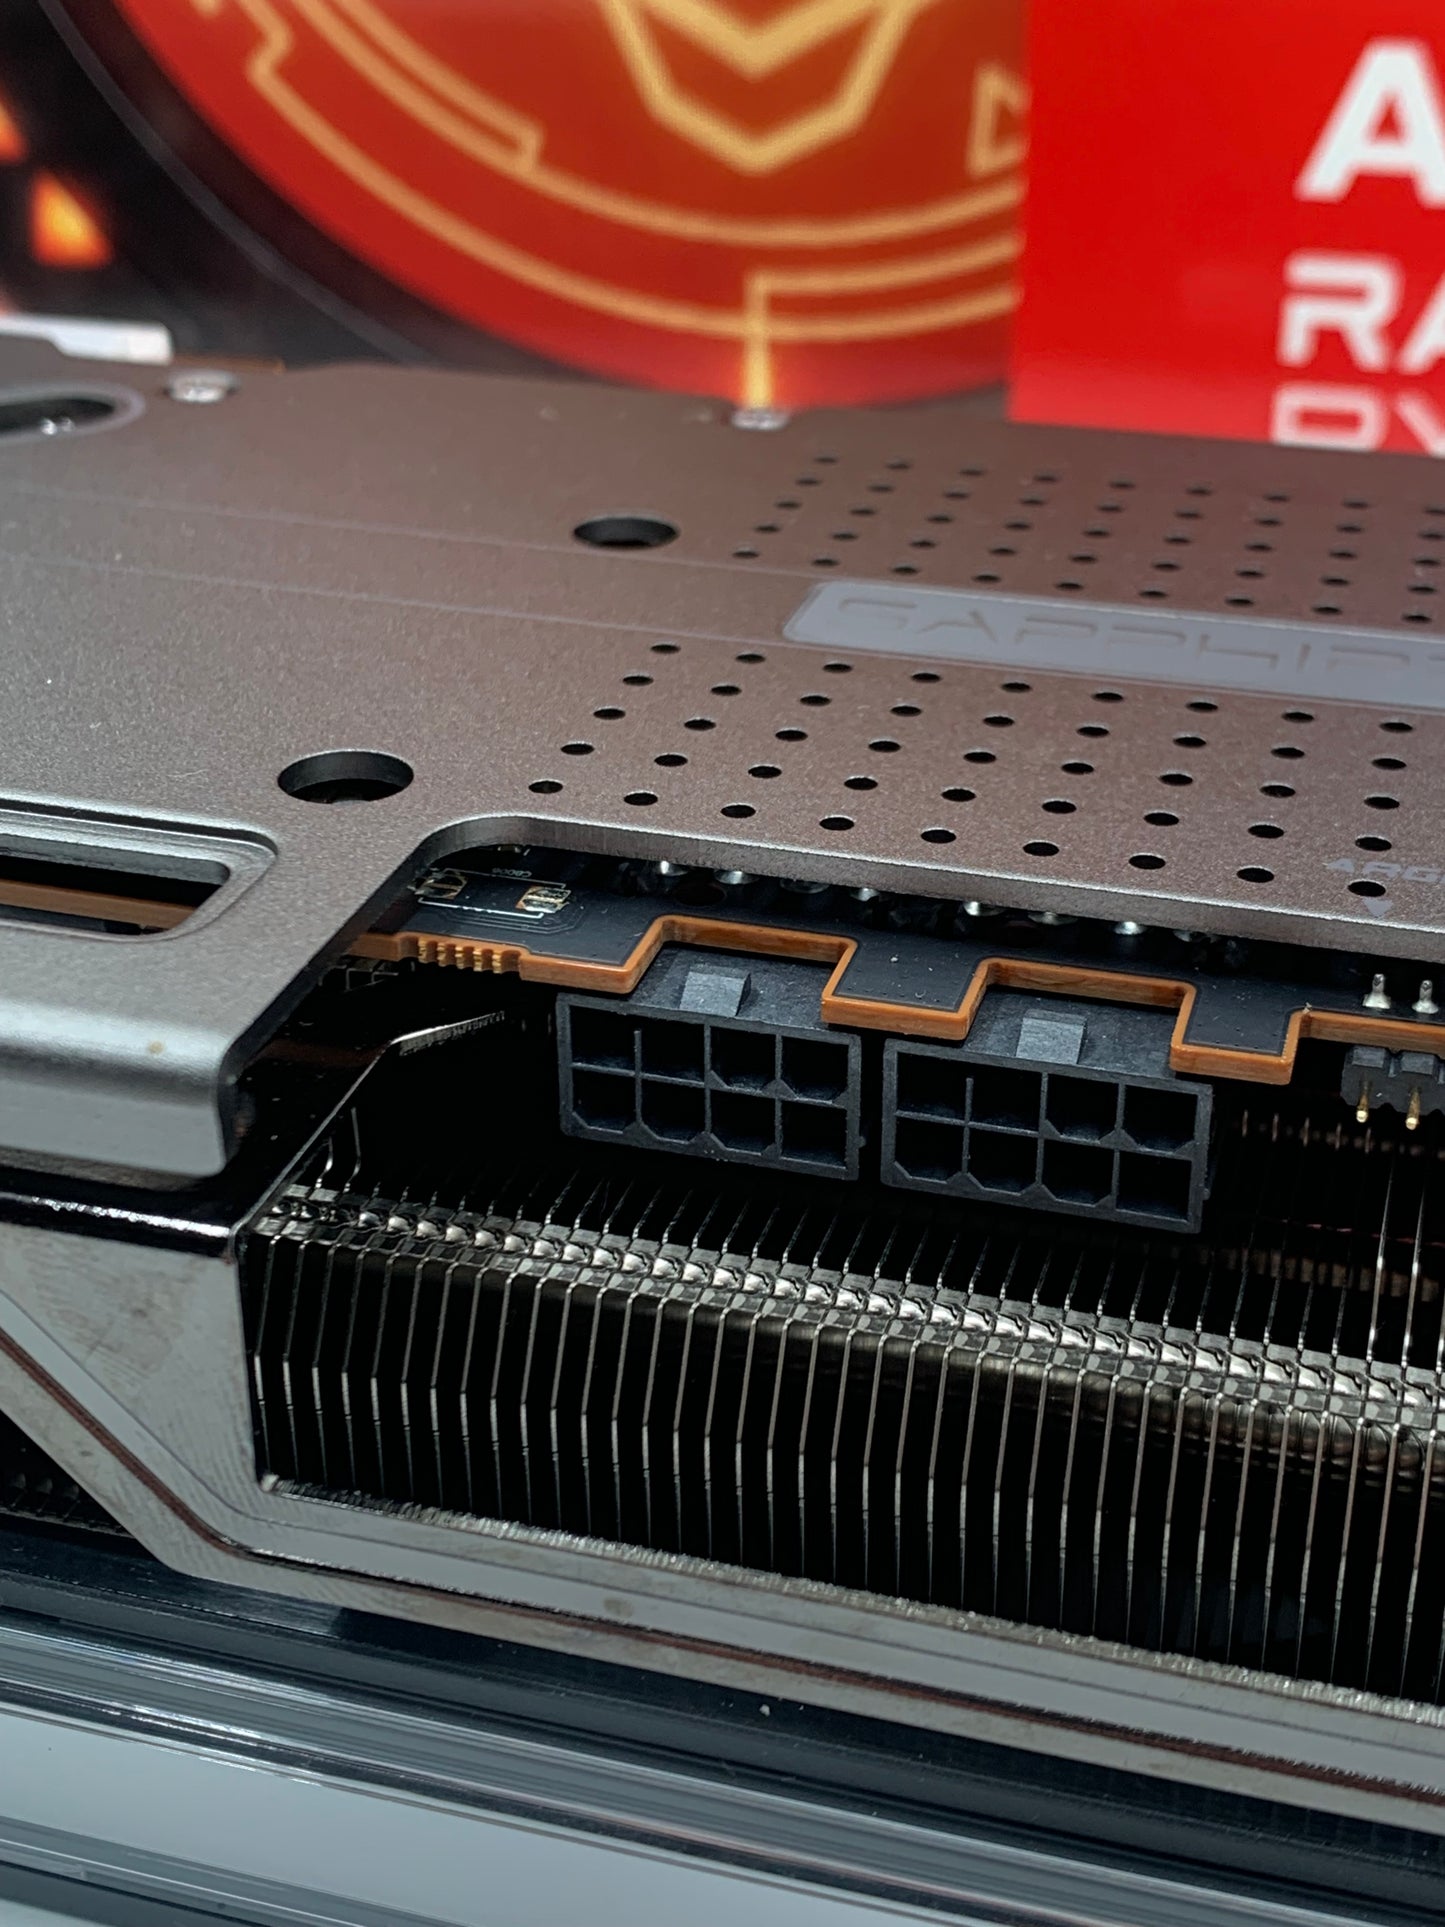 AMD Sapphire Radeon RX 7800XT Nitro+ 16GB GDDR6 - A+